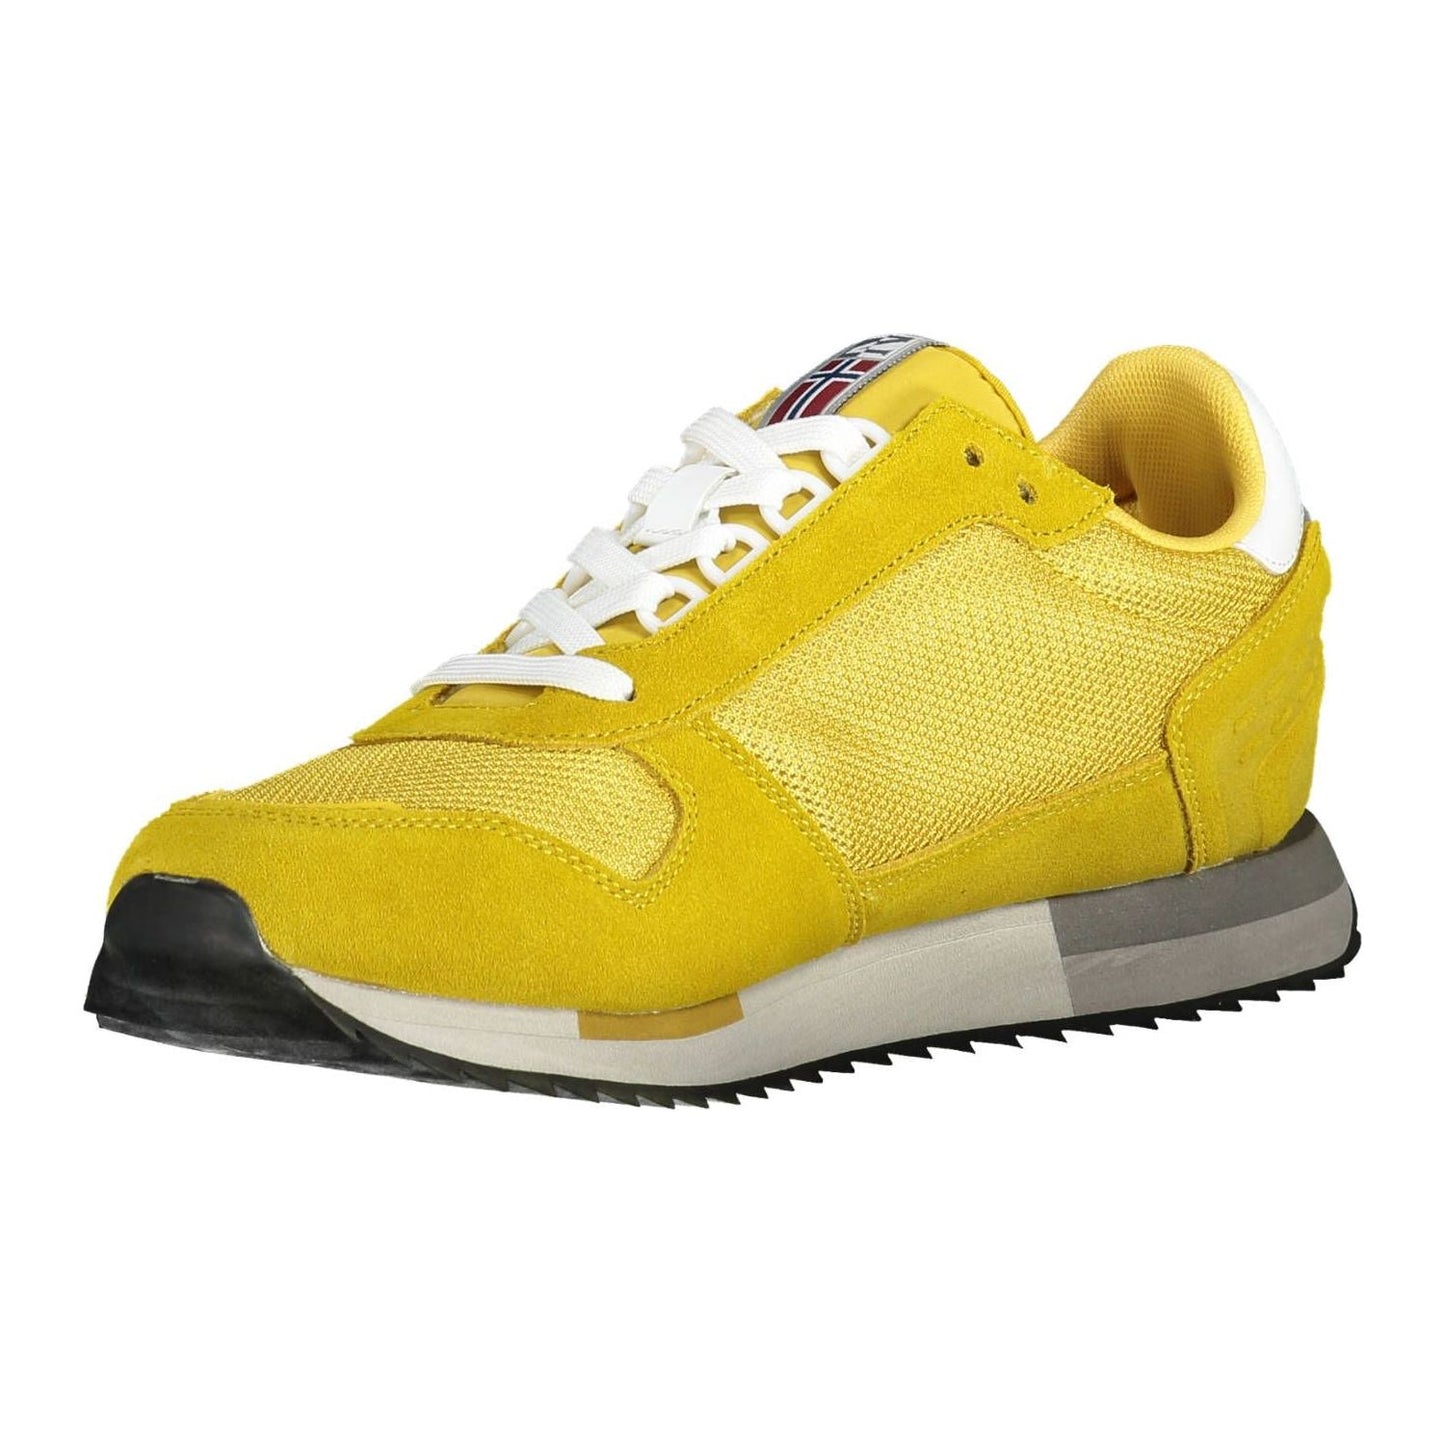 Napapijri Vibrant Yellow Lace-Up Sporty Sneakers vibrant-yellow-lace-up-sporty-sneakers